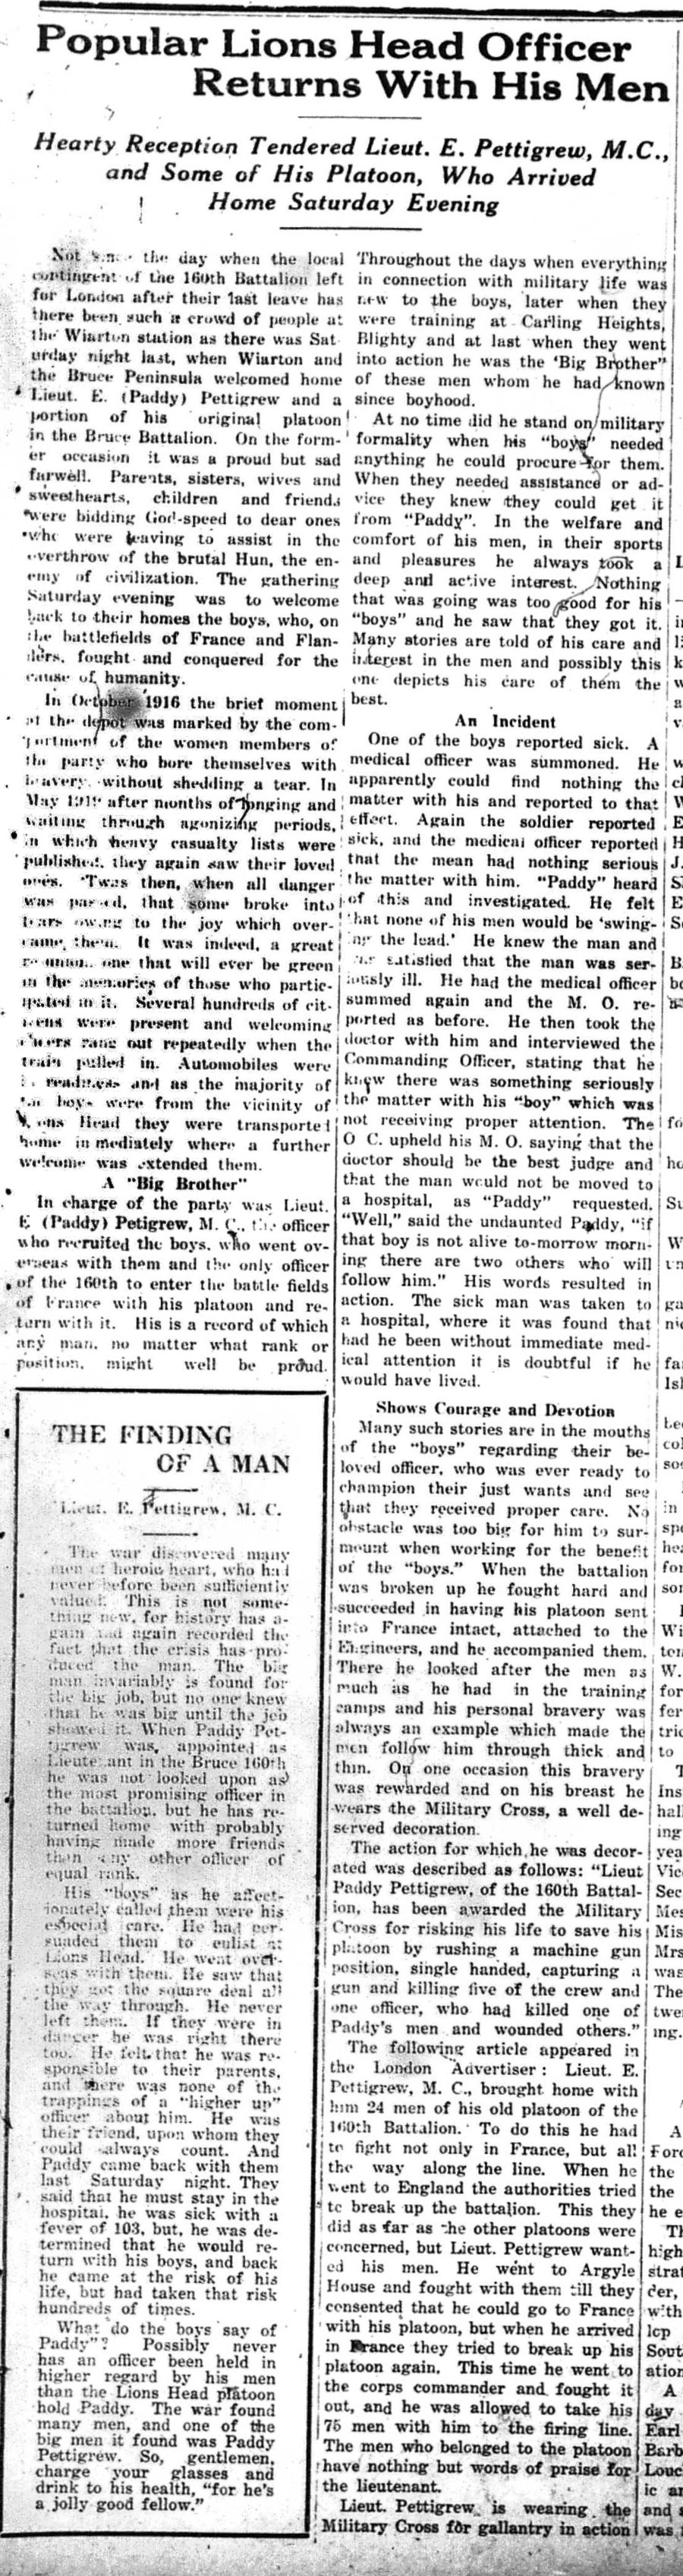 Canadian Echo, May 21, 1919 